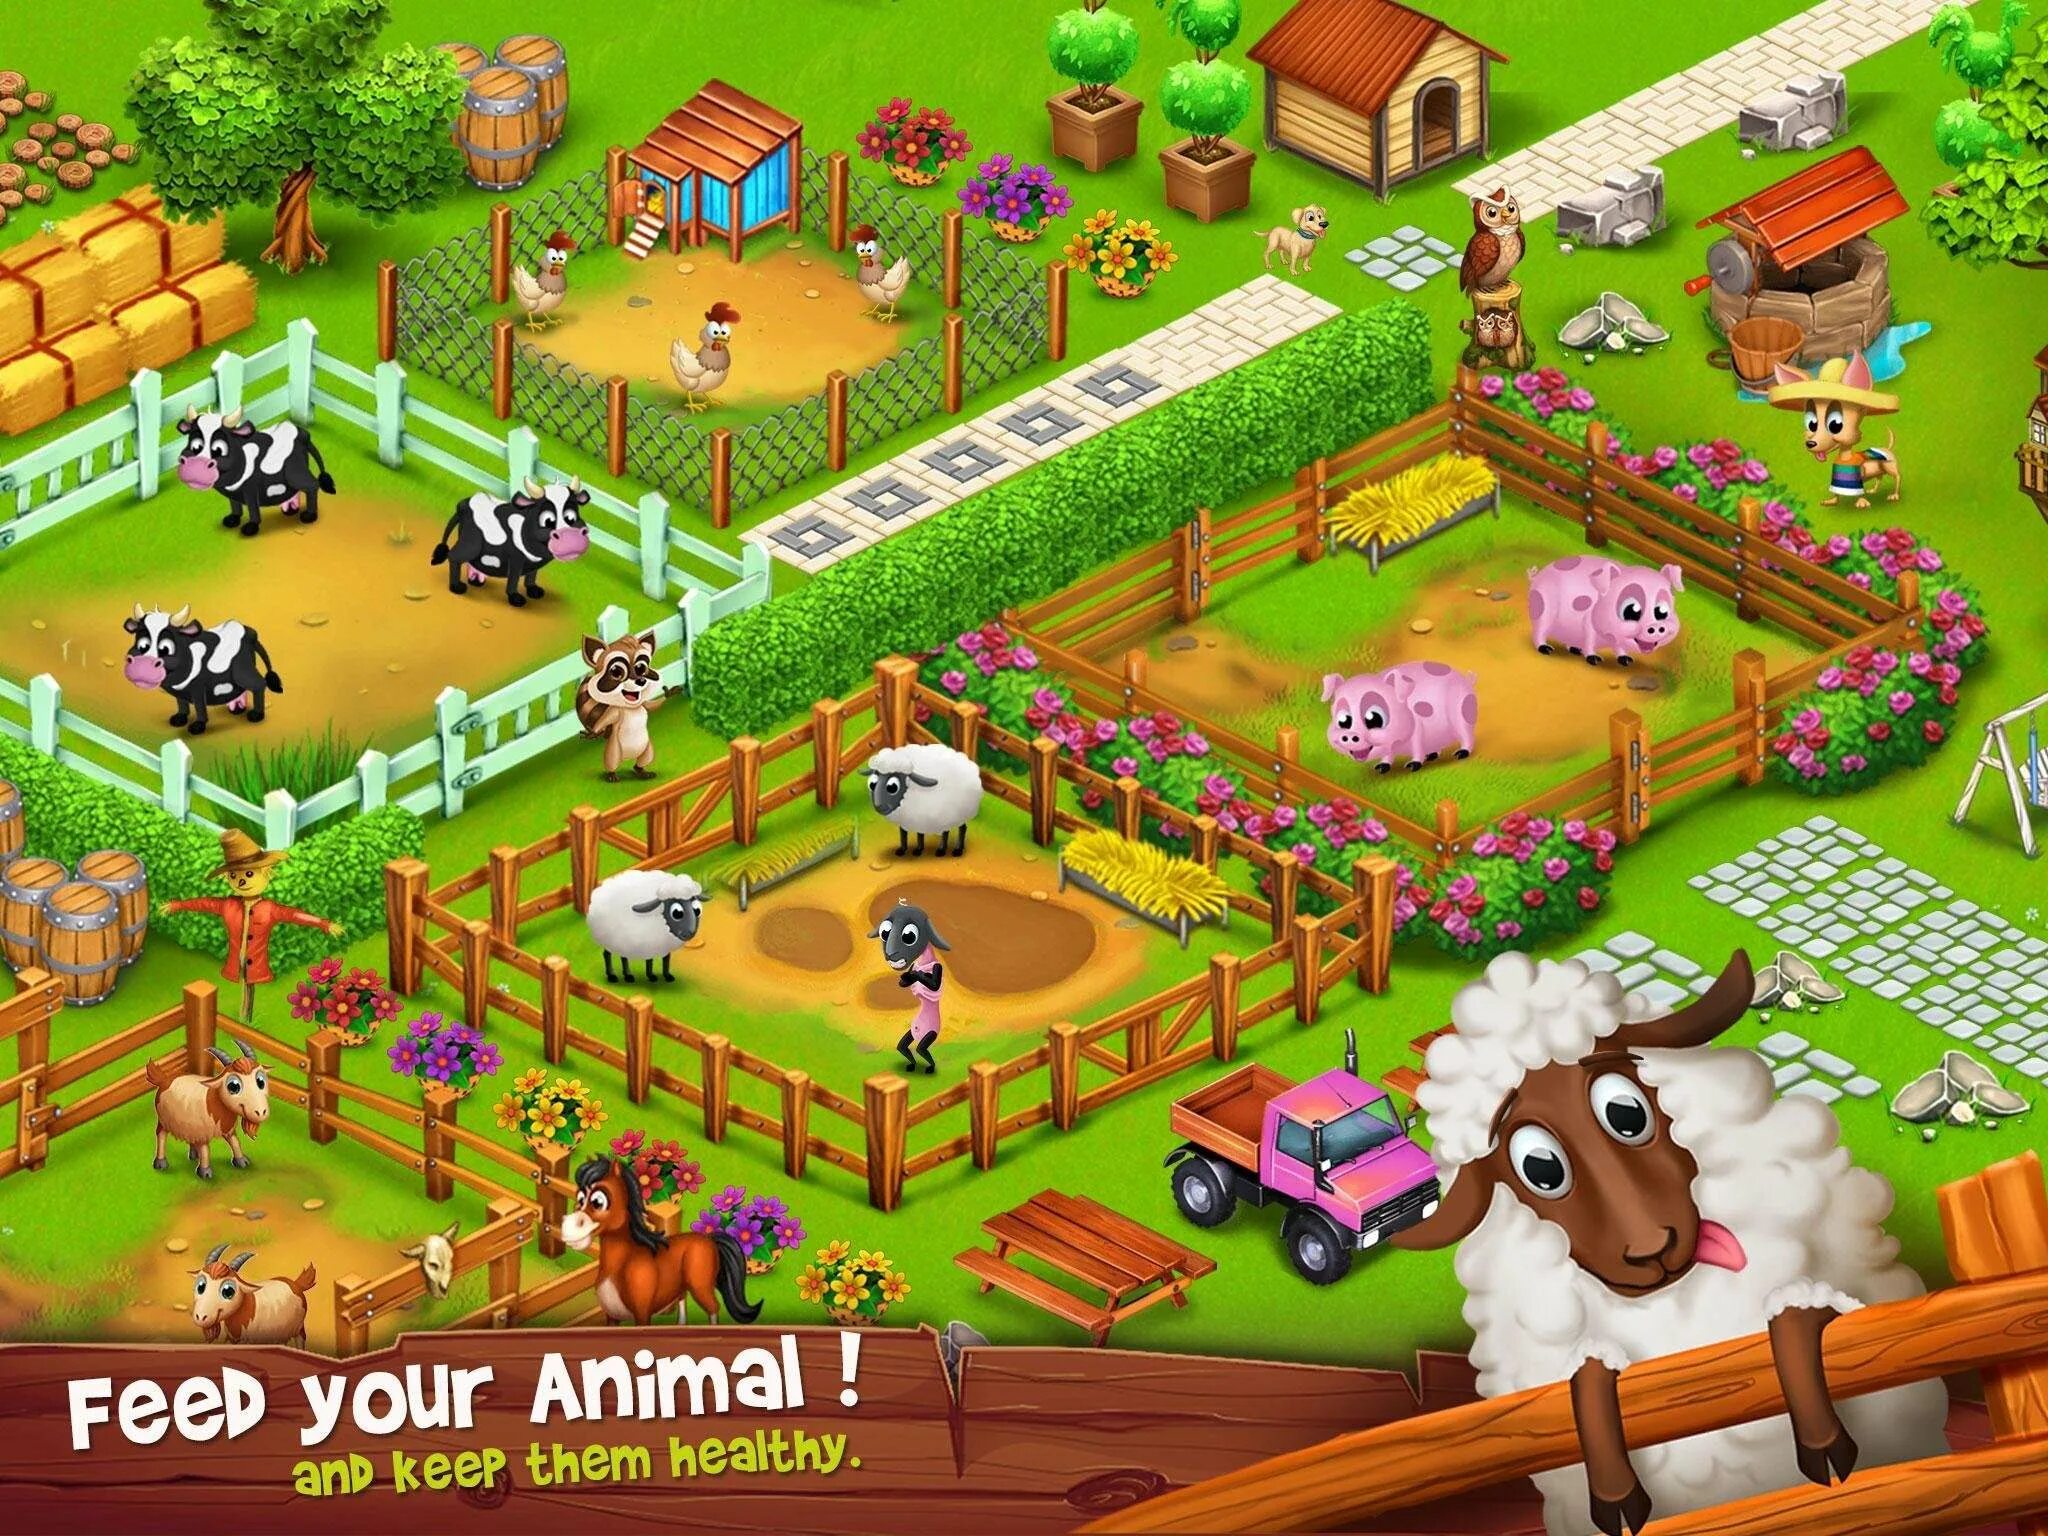 Игра ферма. Холидей игра ферма. Счастливая ферма (Farm Harvest 3). Ферма с курочками игра. Ферма игра мельница.